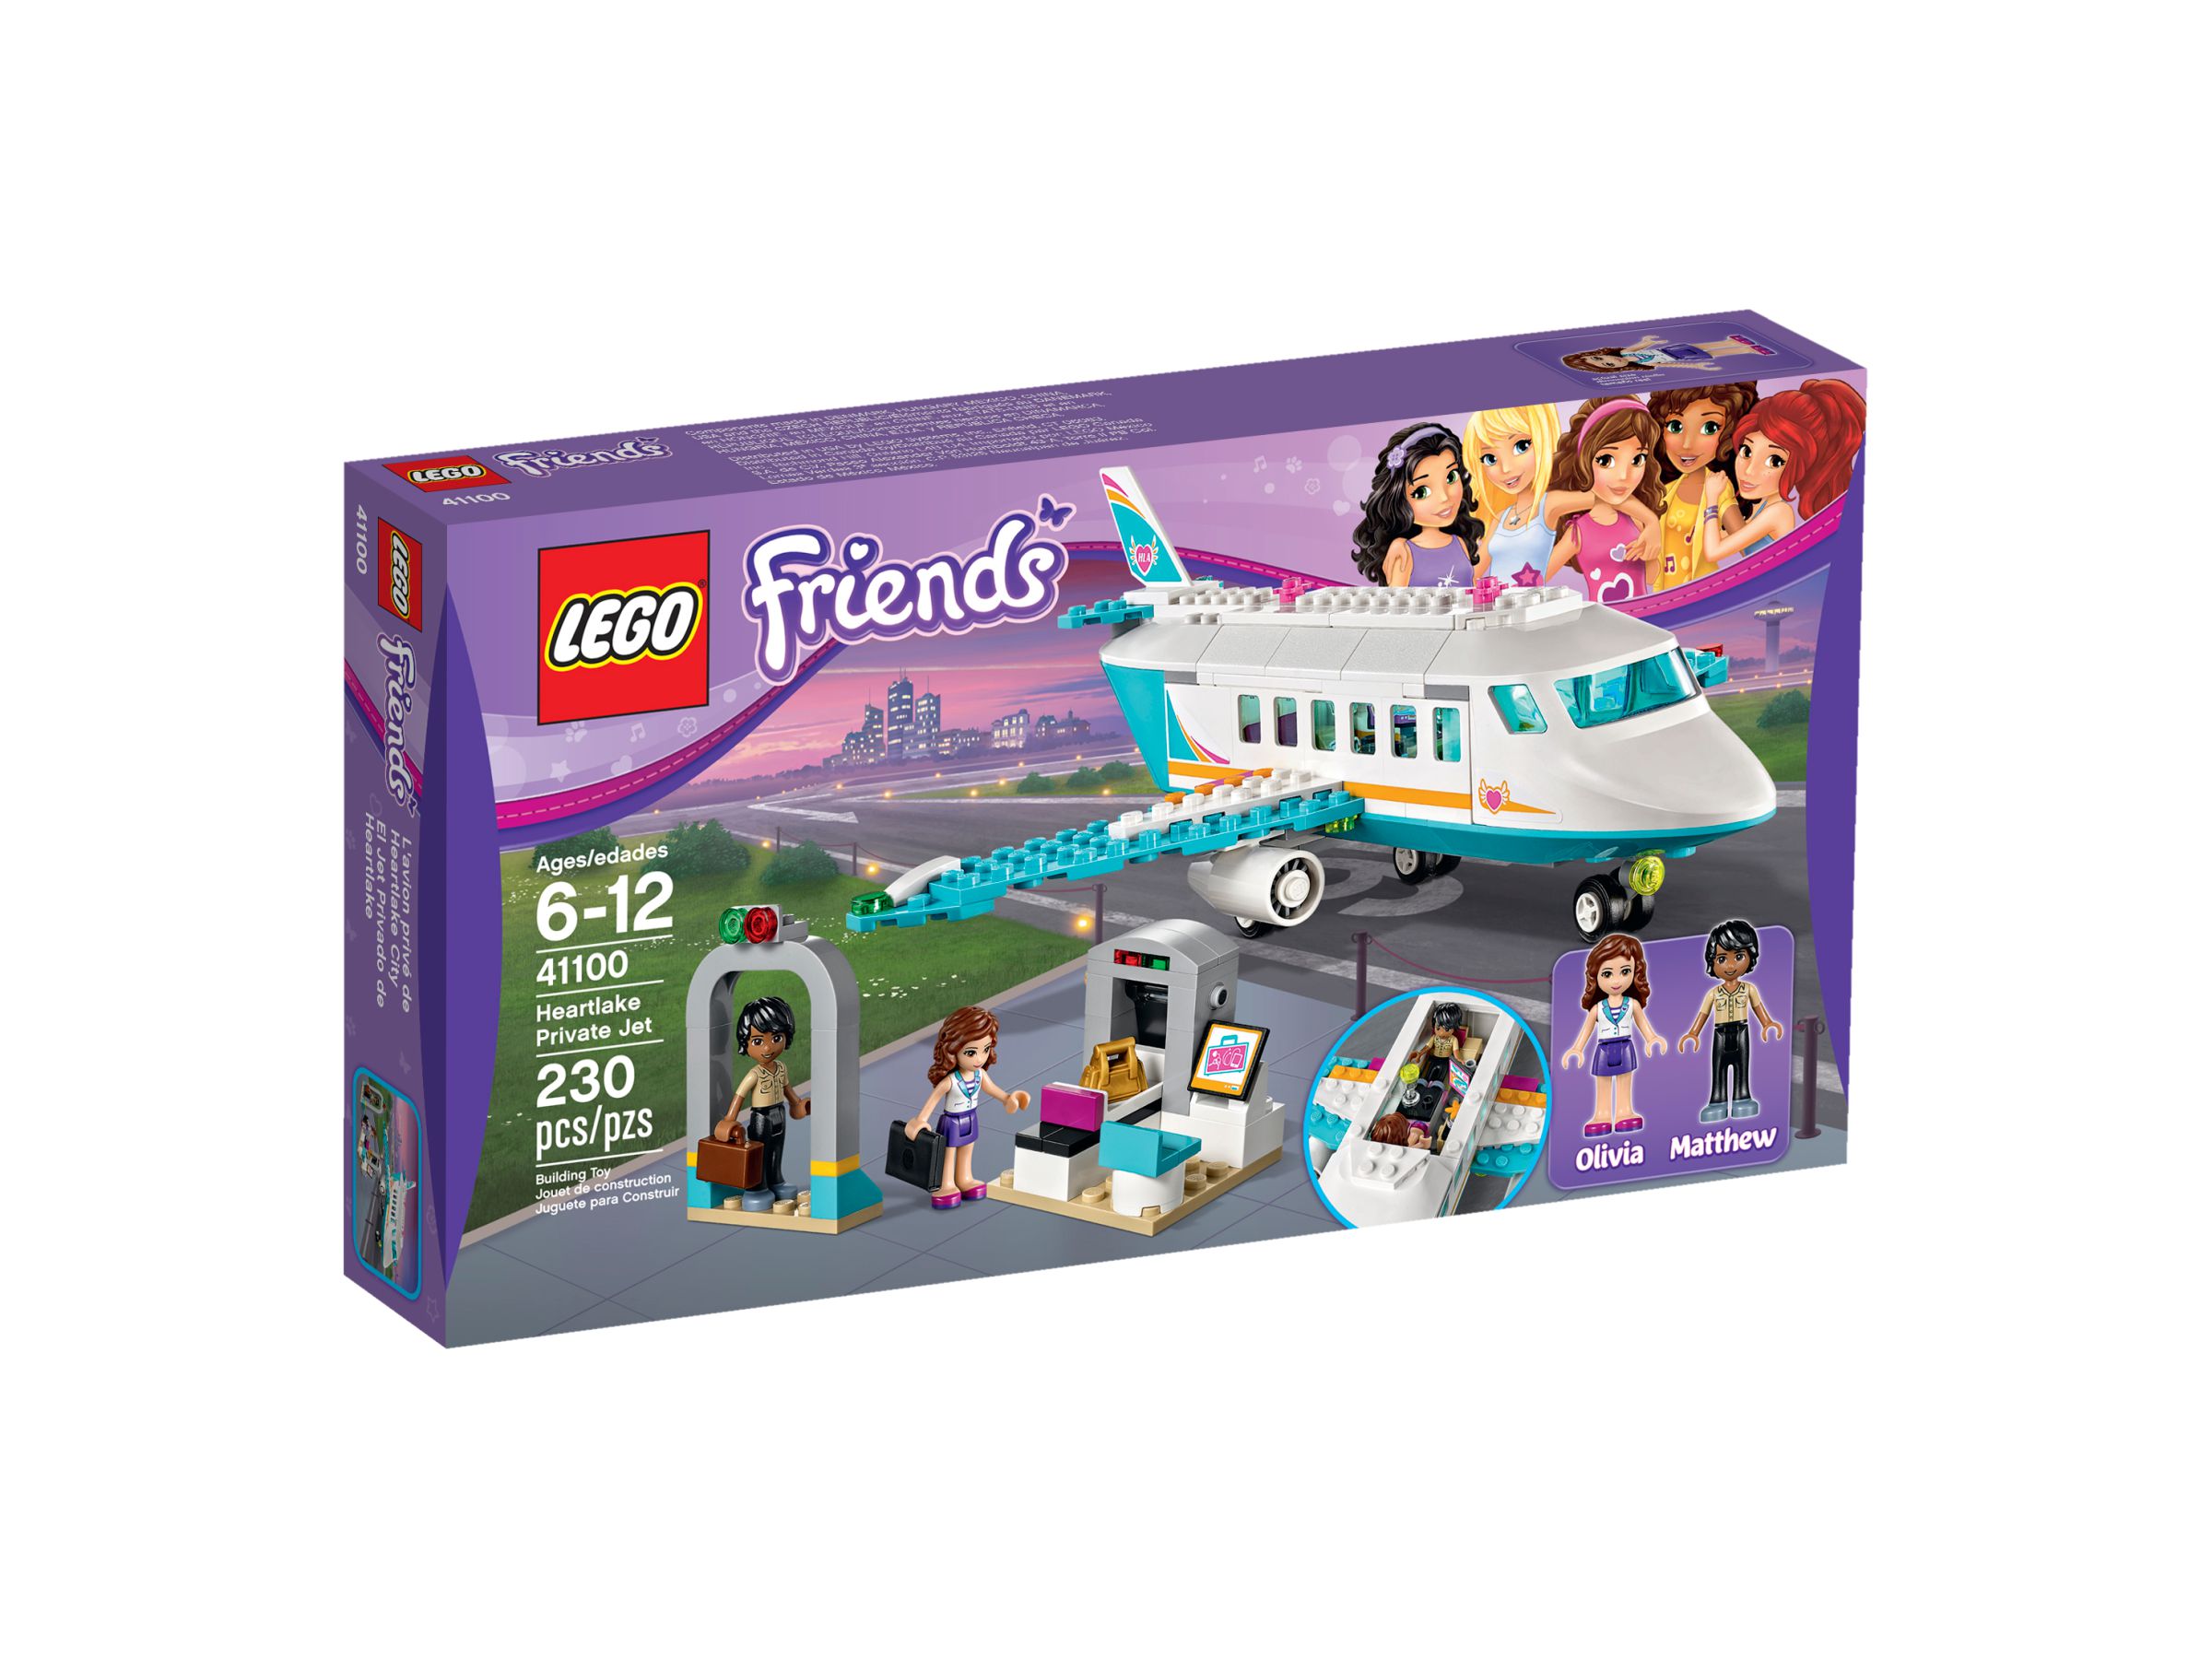 LEGO Friends 41100 Heartlake Jet LEGO_41100_alt1.jpg